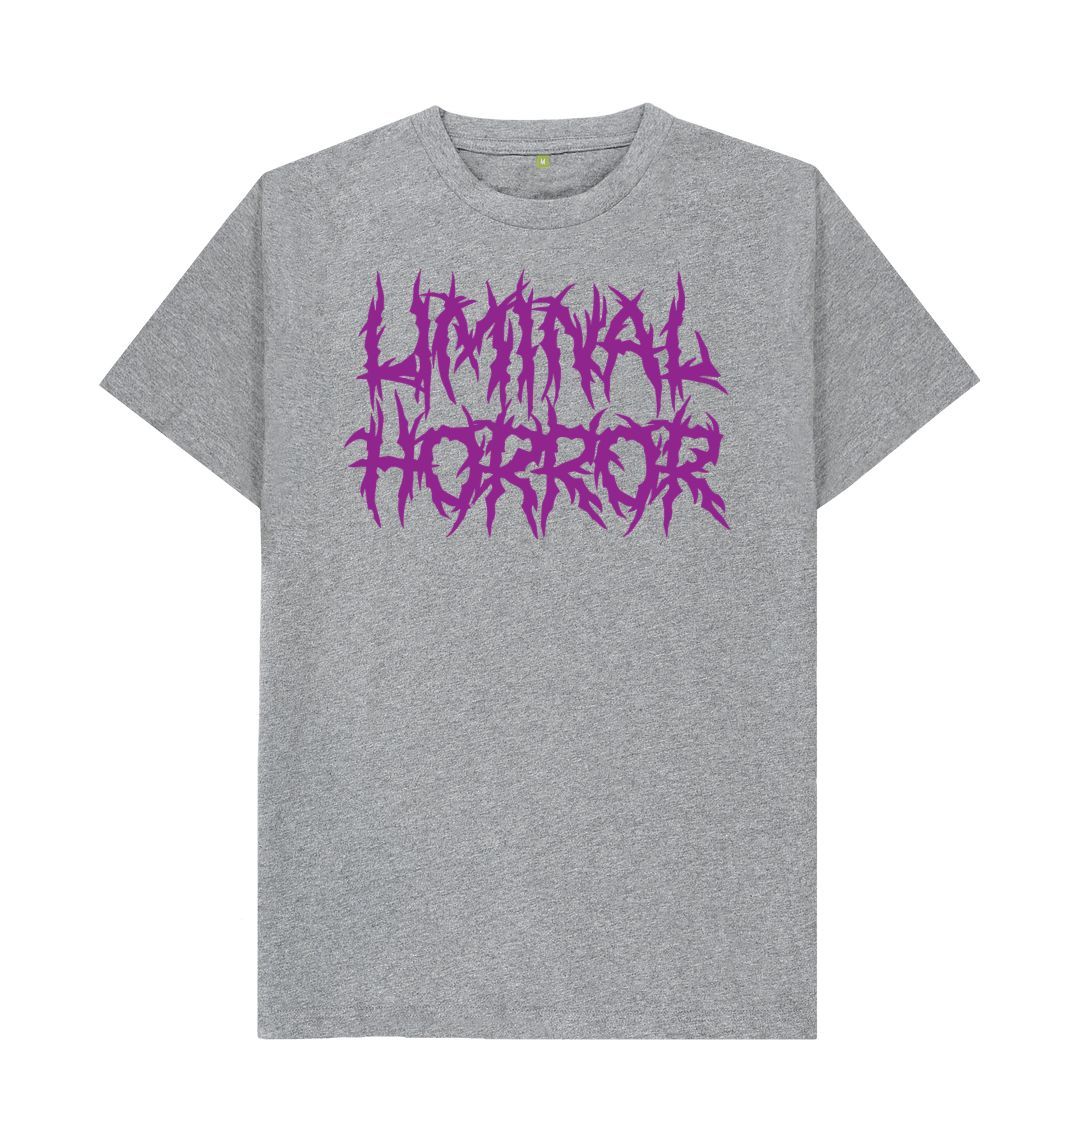 Athletic Grey Liminal Horror Purple Logo on Light Gray Shirt